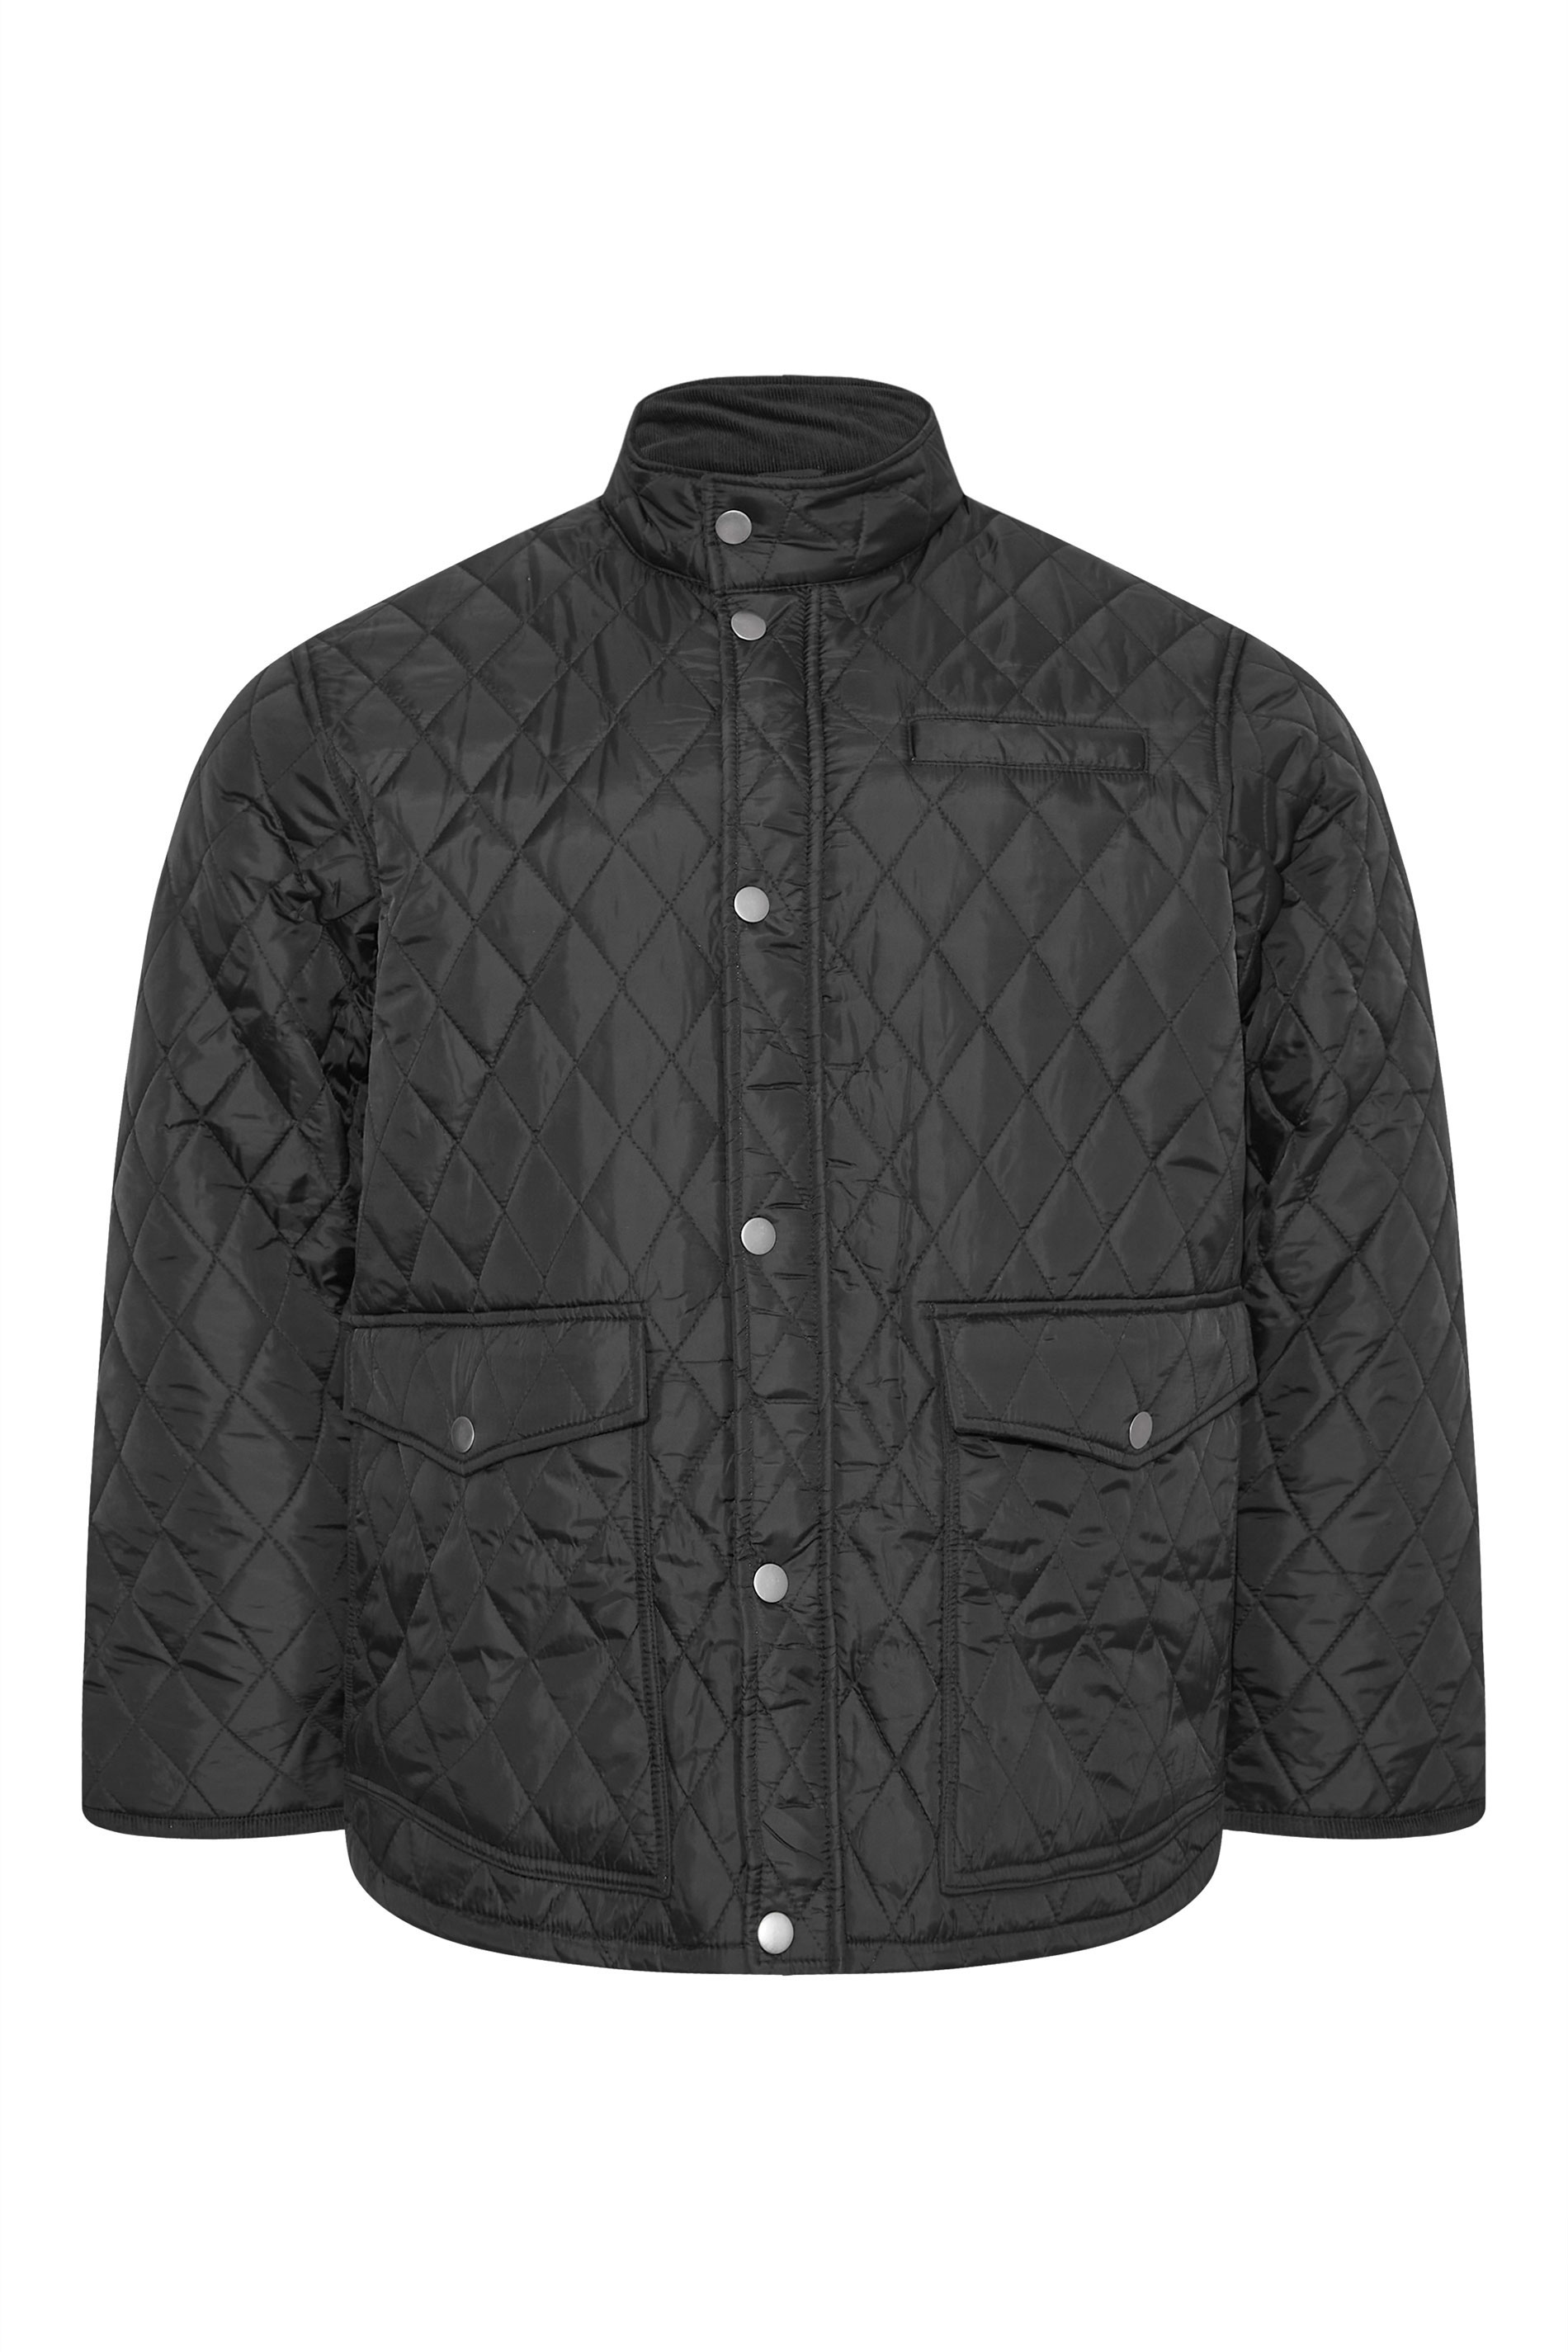 BadRhino Black Quilted Jacket | BadRhino 2